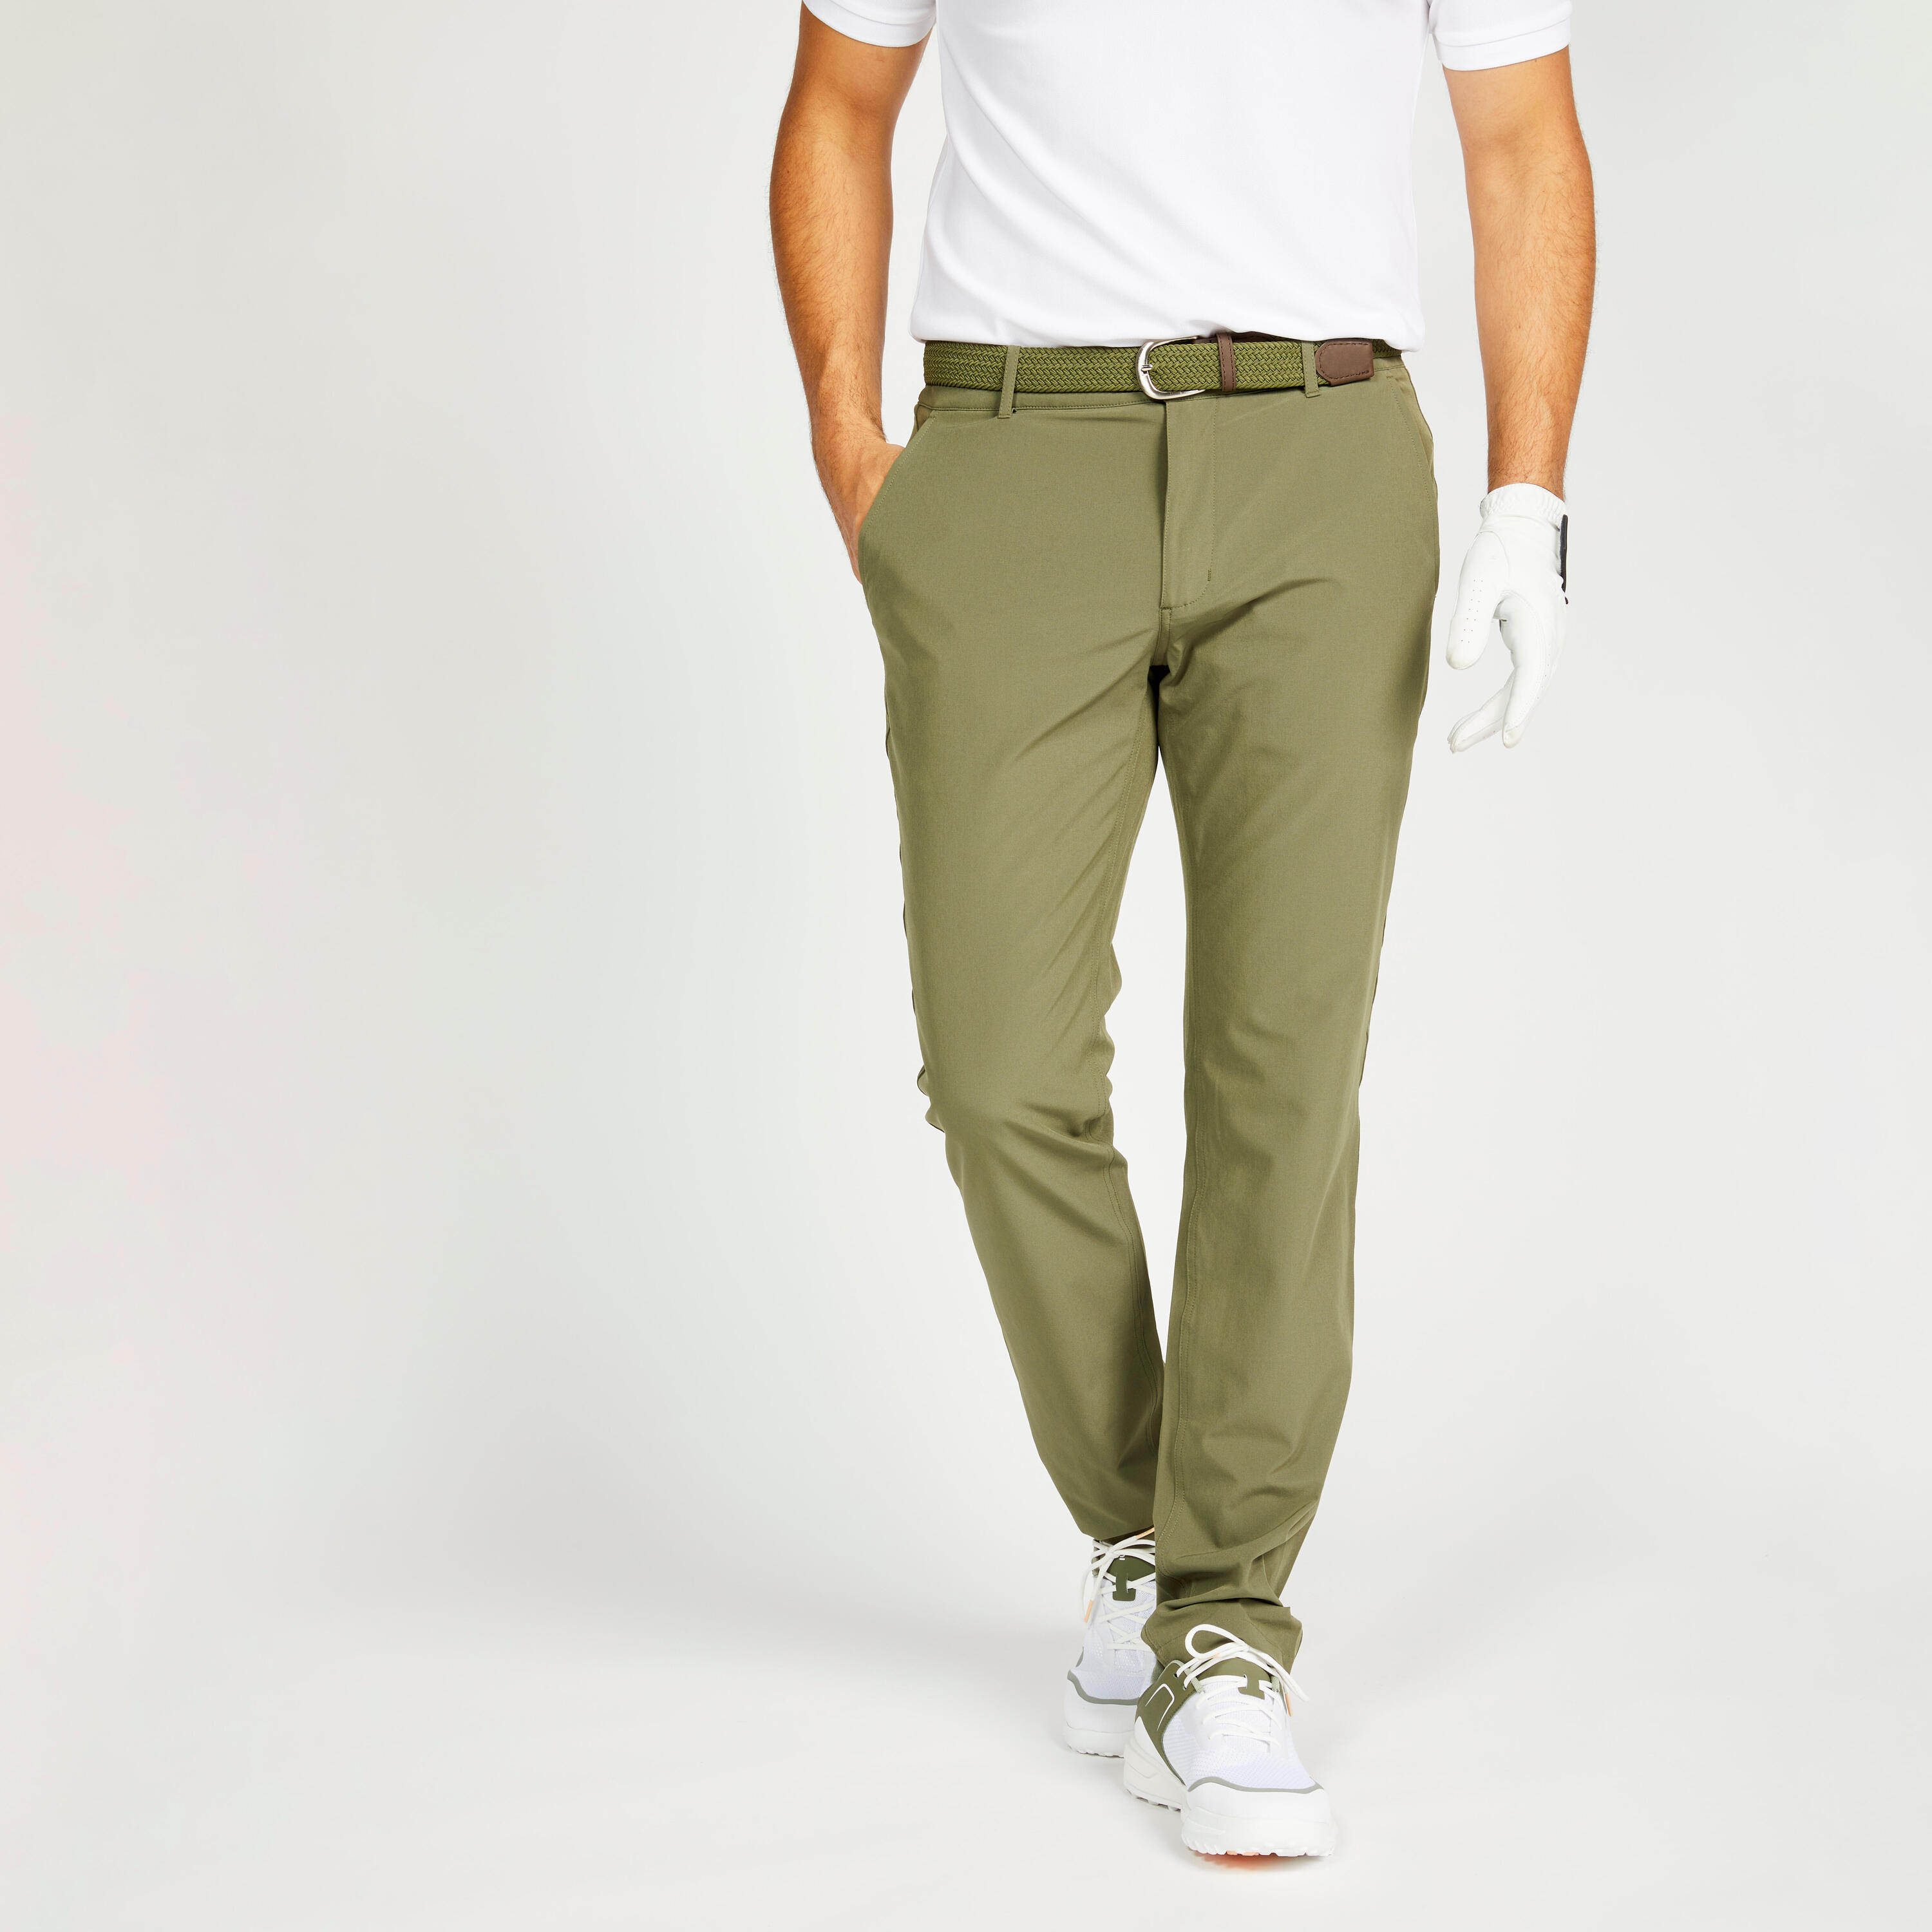 Men's golf trousers - WW 500 khaki 1/4